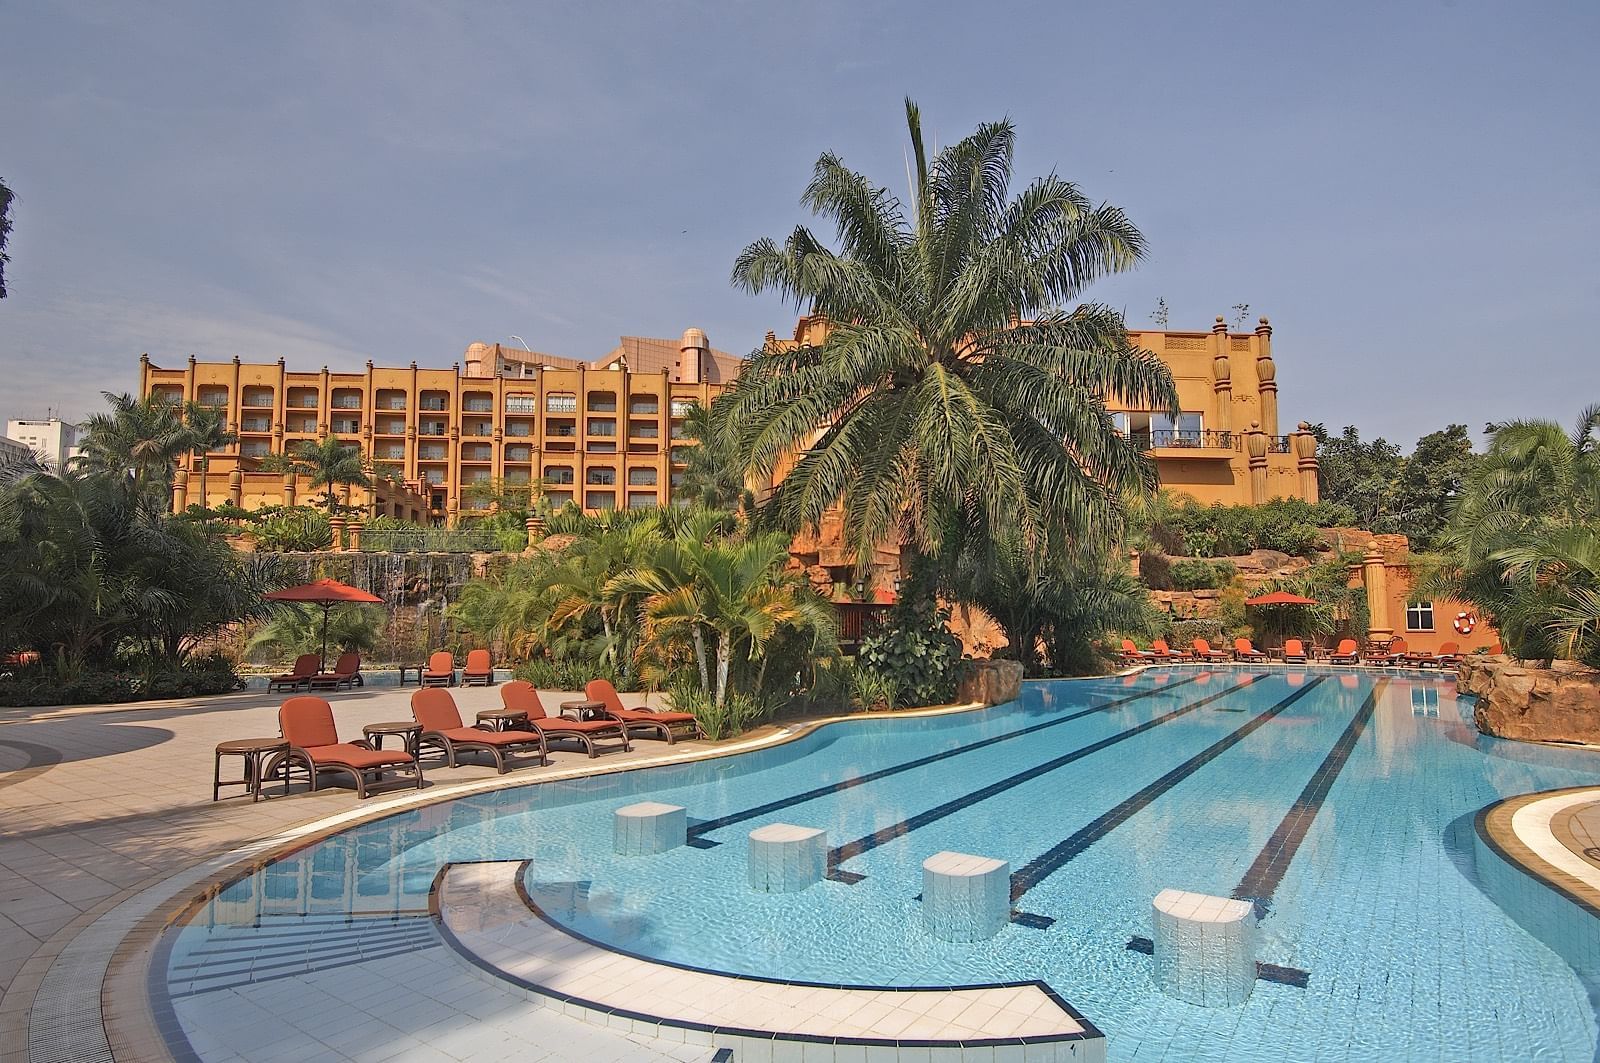 Explore Uganda | Kampala Serena Hotel Travel Guide | Experiences